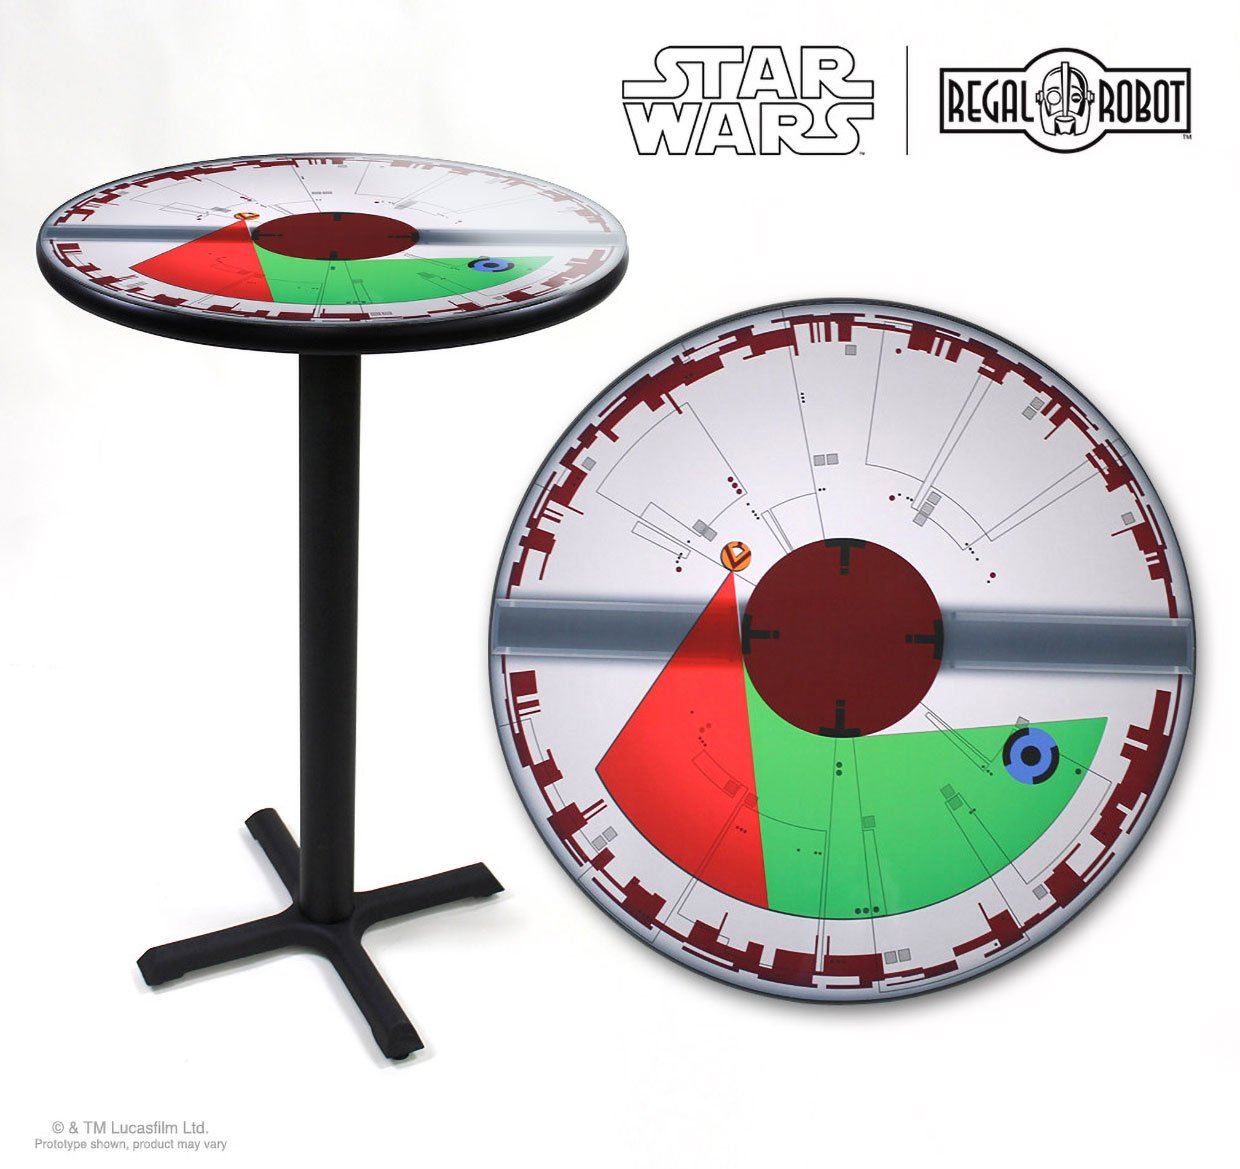 Star Wars Cafe Tables